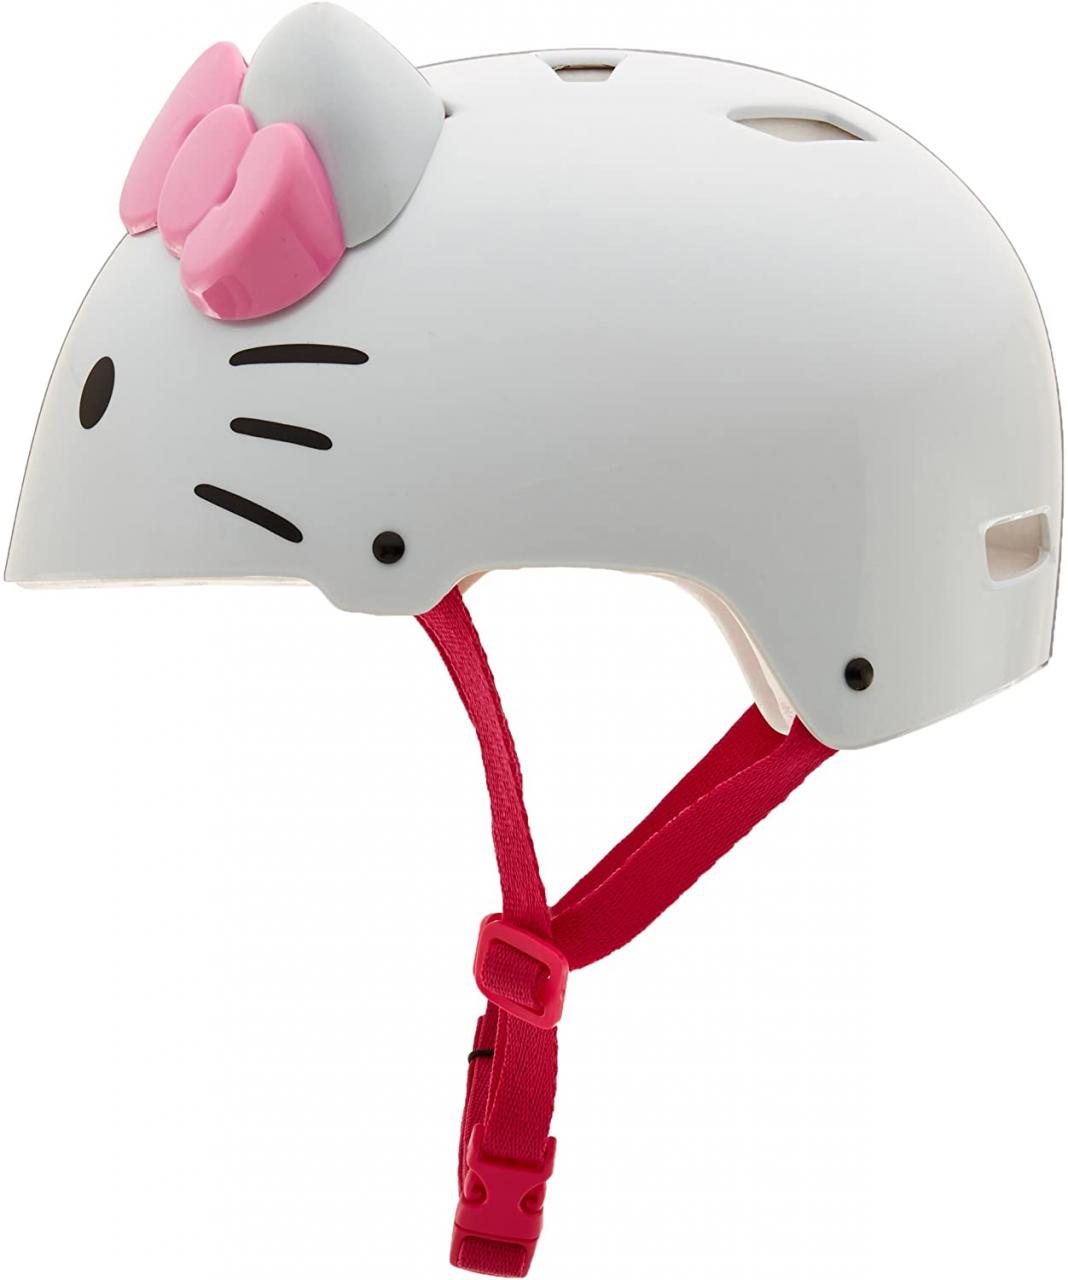 Buy Bell Girls Hello Kitty Bike Helmet Online in Vietnam. B00UKEKFEC